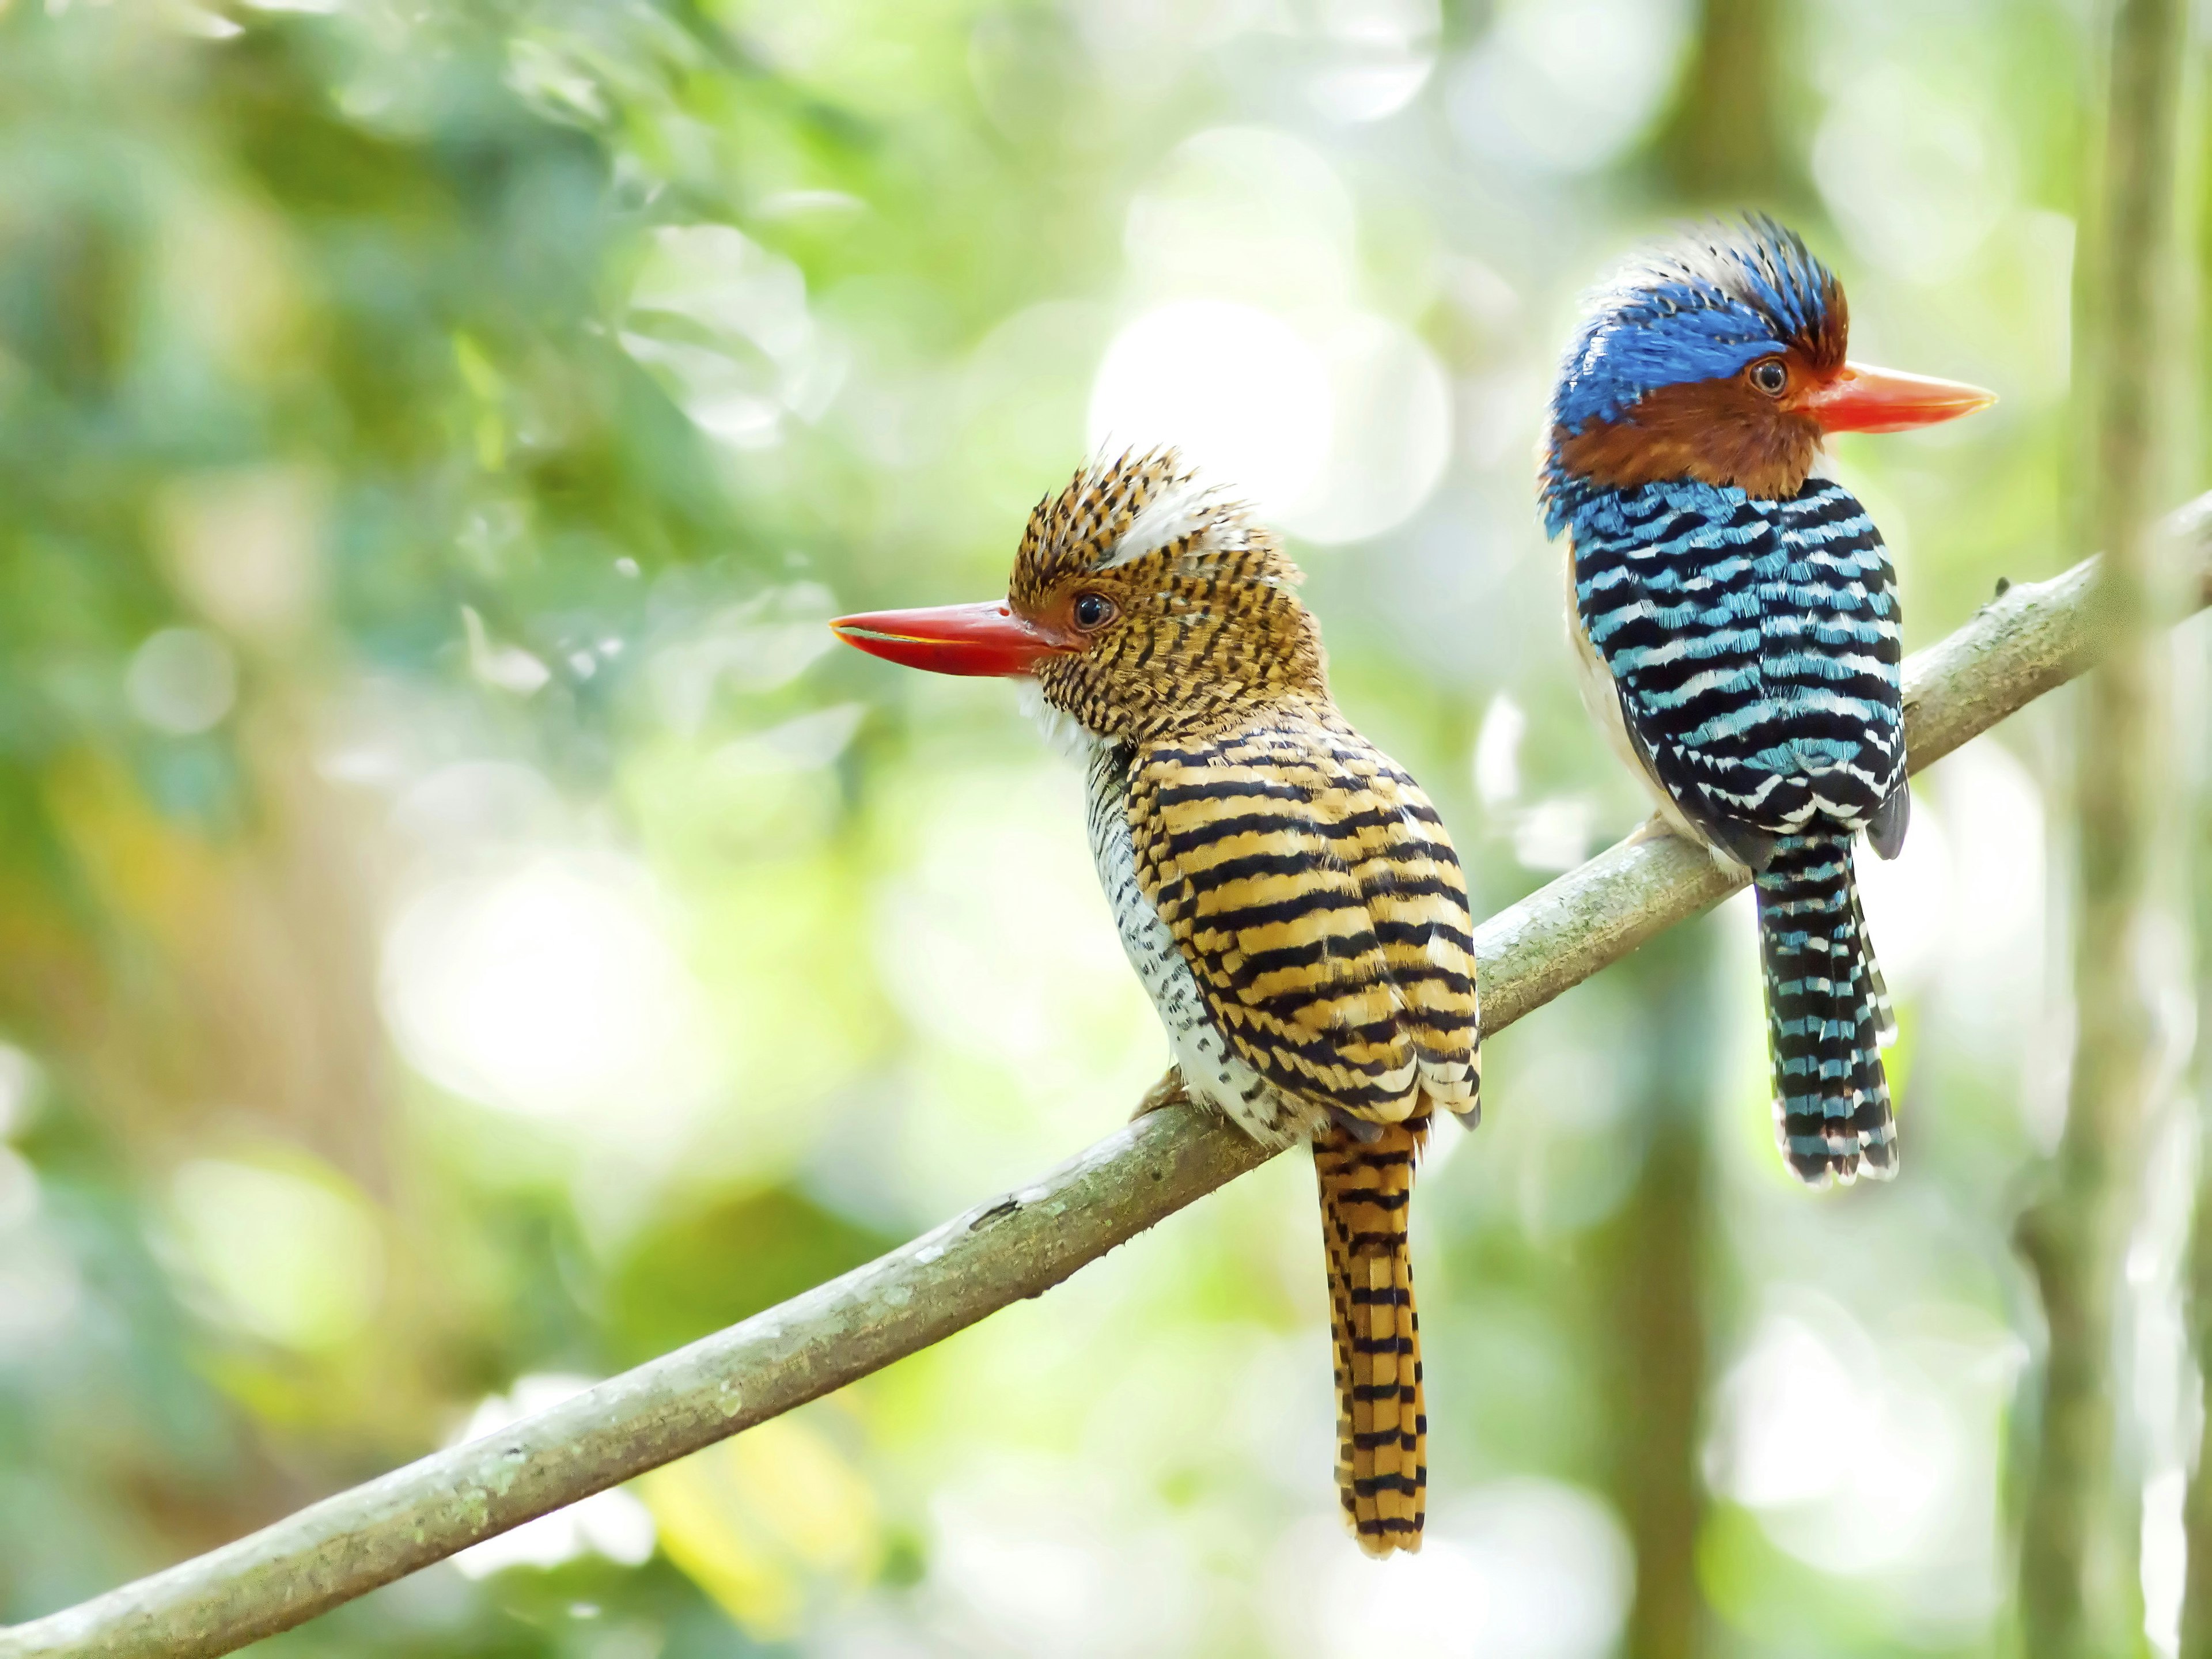 Banded kingfisher birds